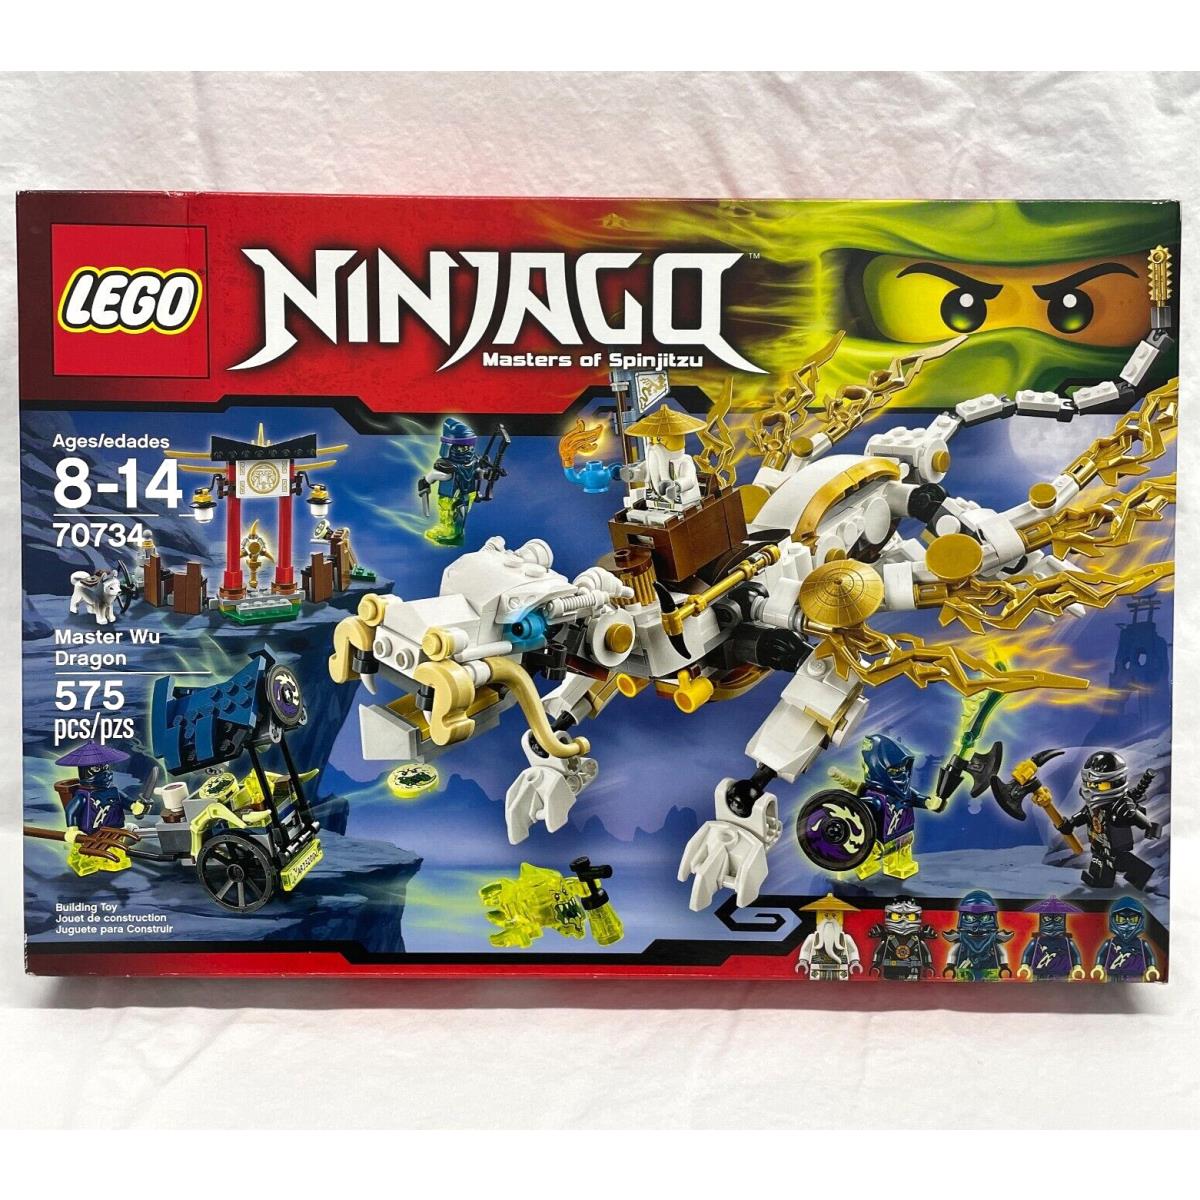 Lego Ninjago Set 70734 - Master WU Dragon Rare Retired 575 Pcs